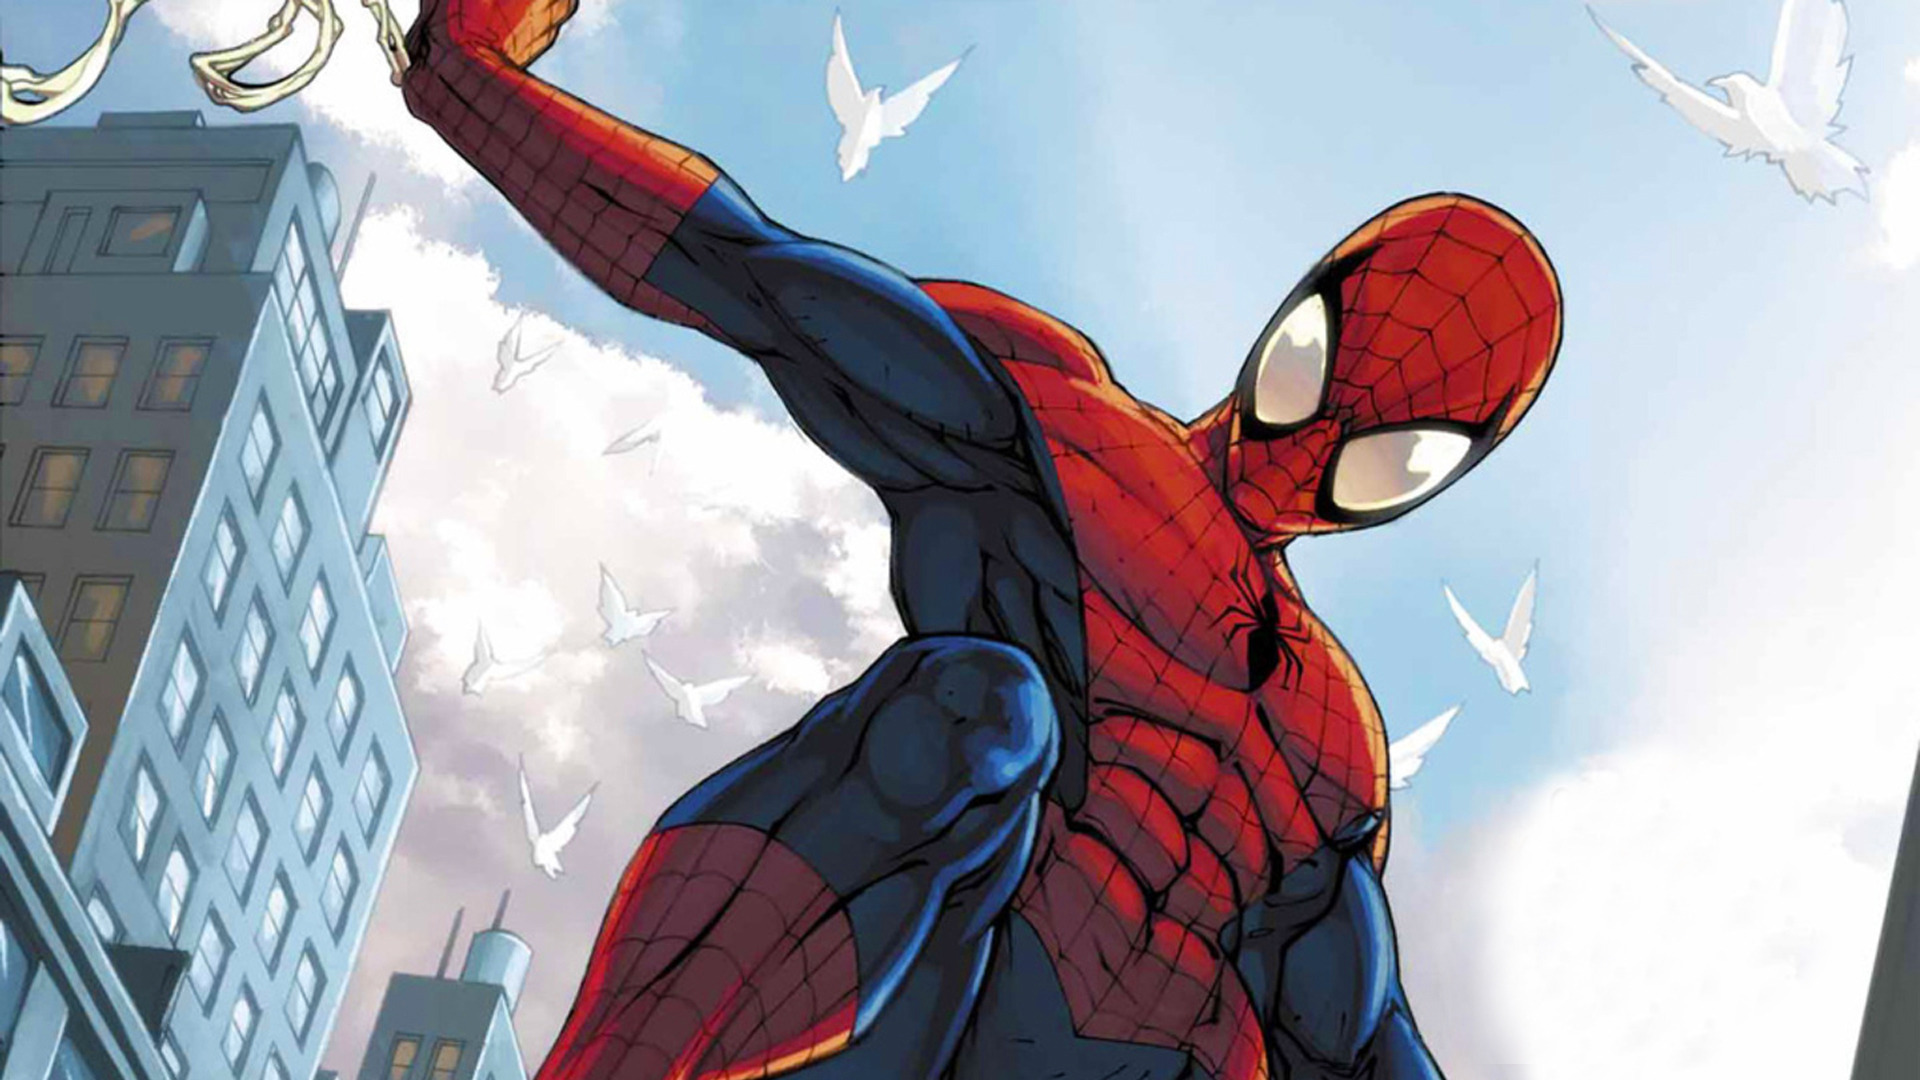 [40+] Amazing Spiderman Wallpapers for Desktop on ...